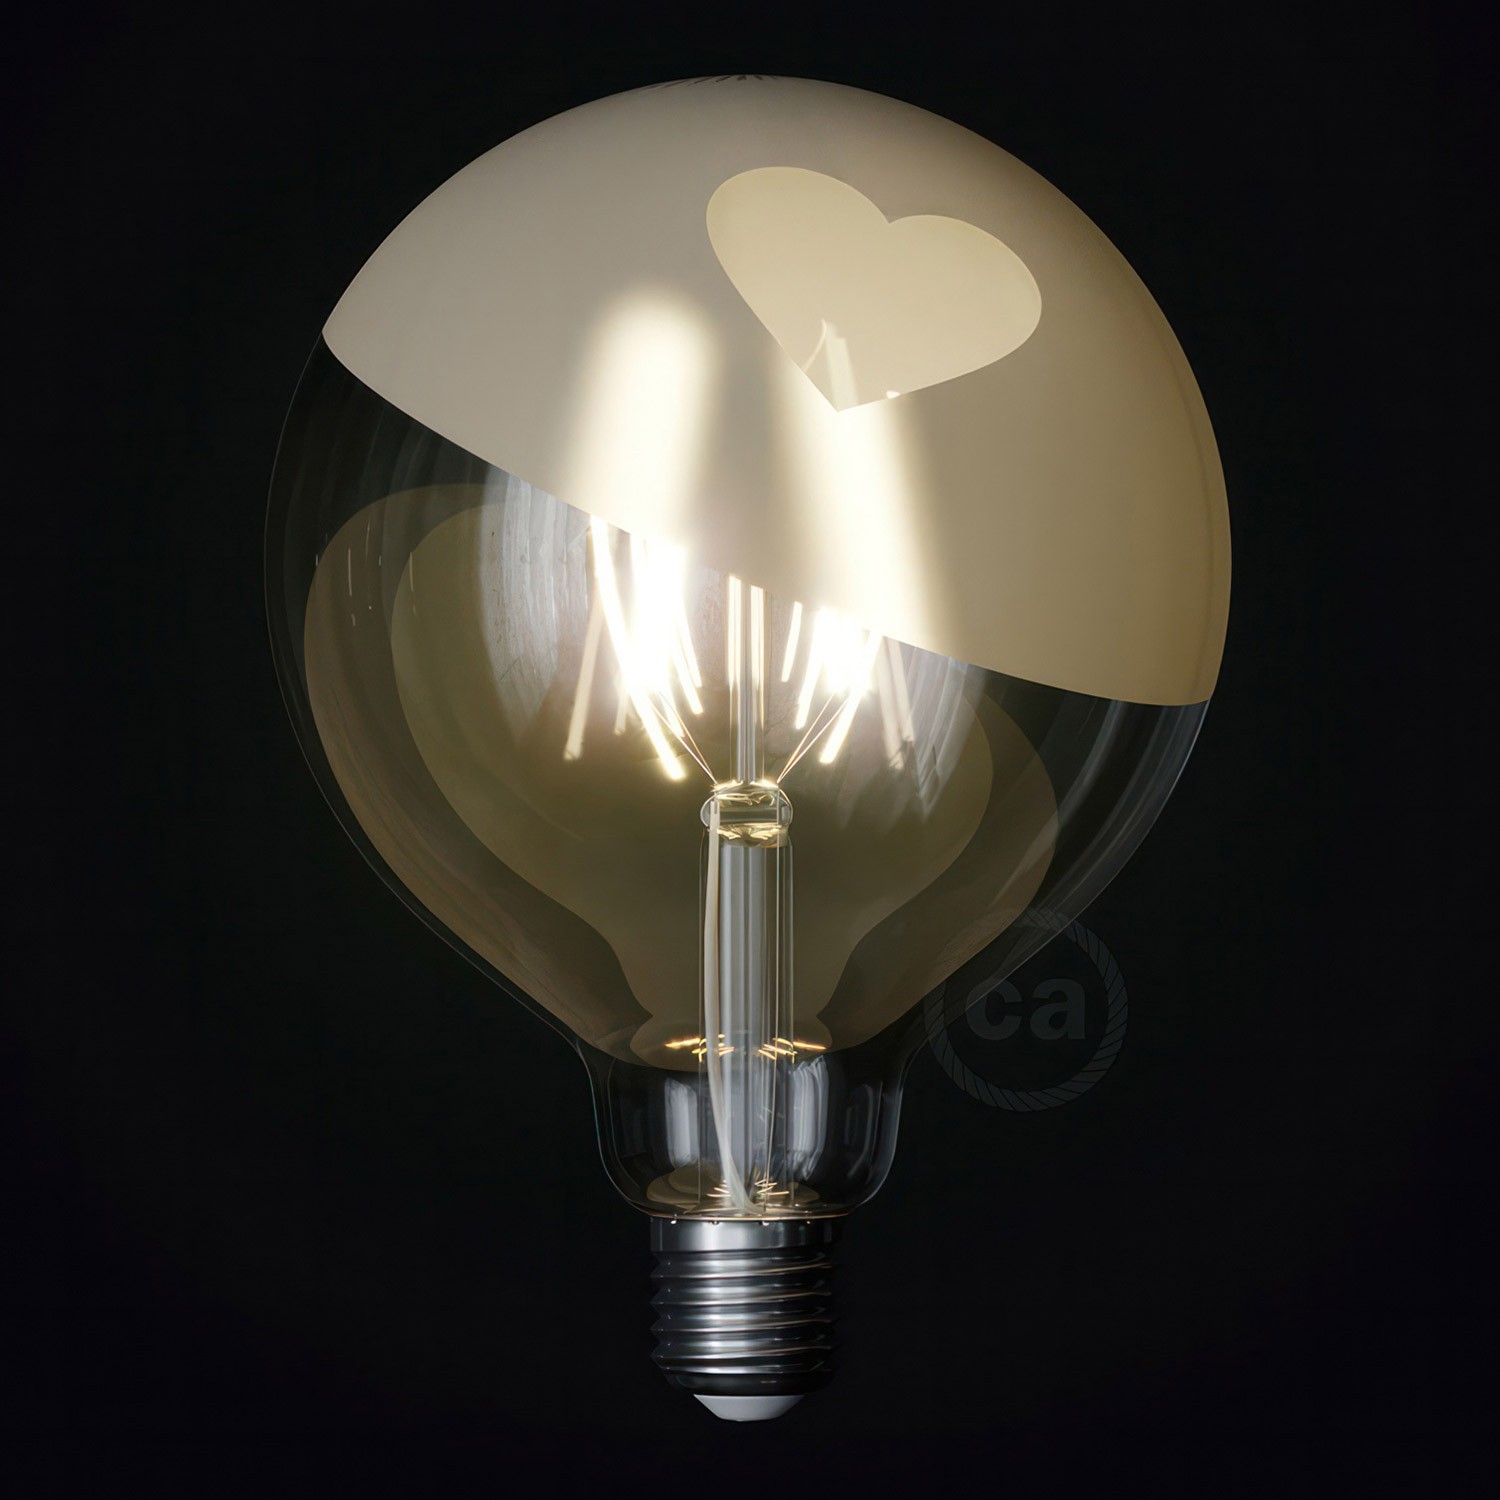 LED-Glühbirne Globo G125 kurze Filament Linie Tattoo Lamp® Modell Cuore 4W E27 2700K